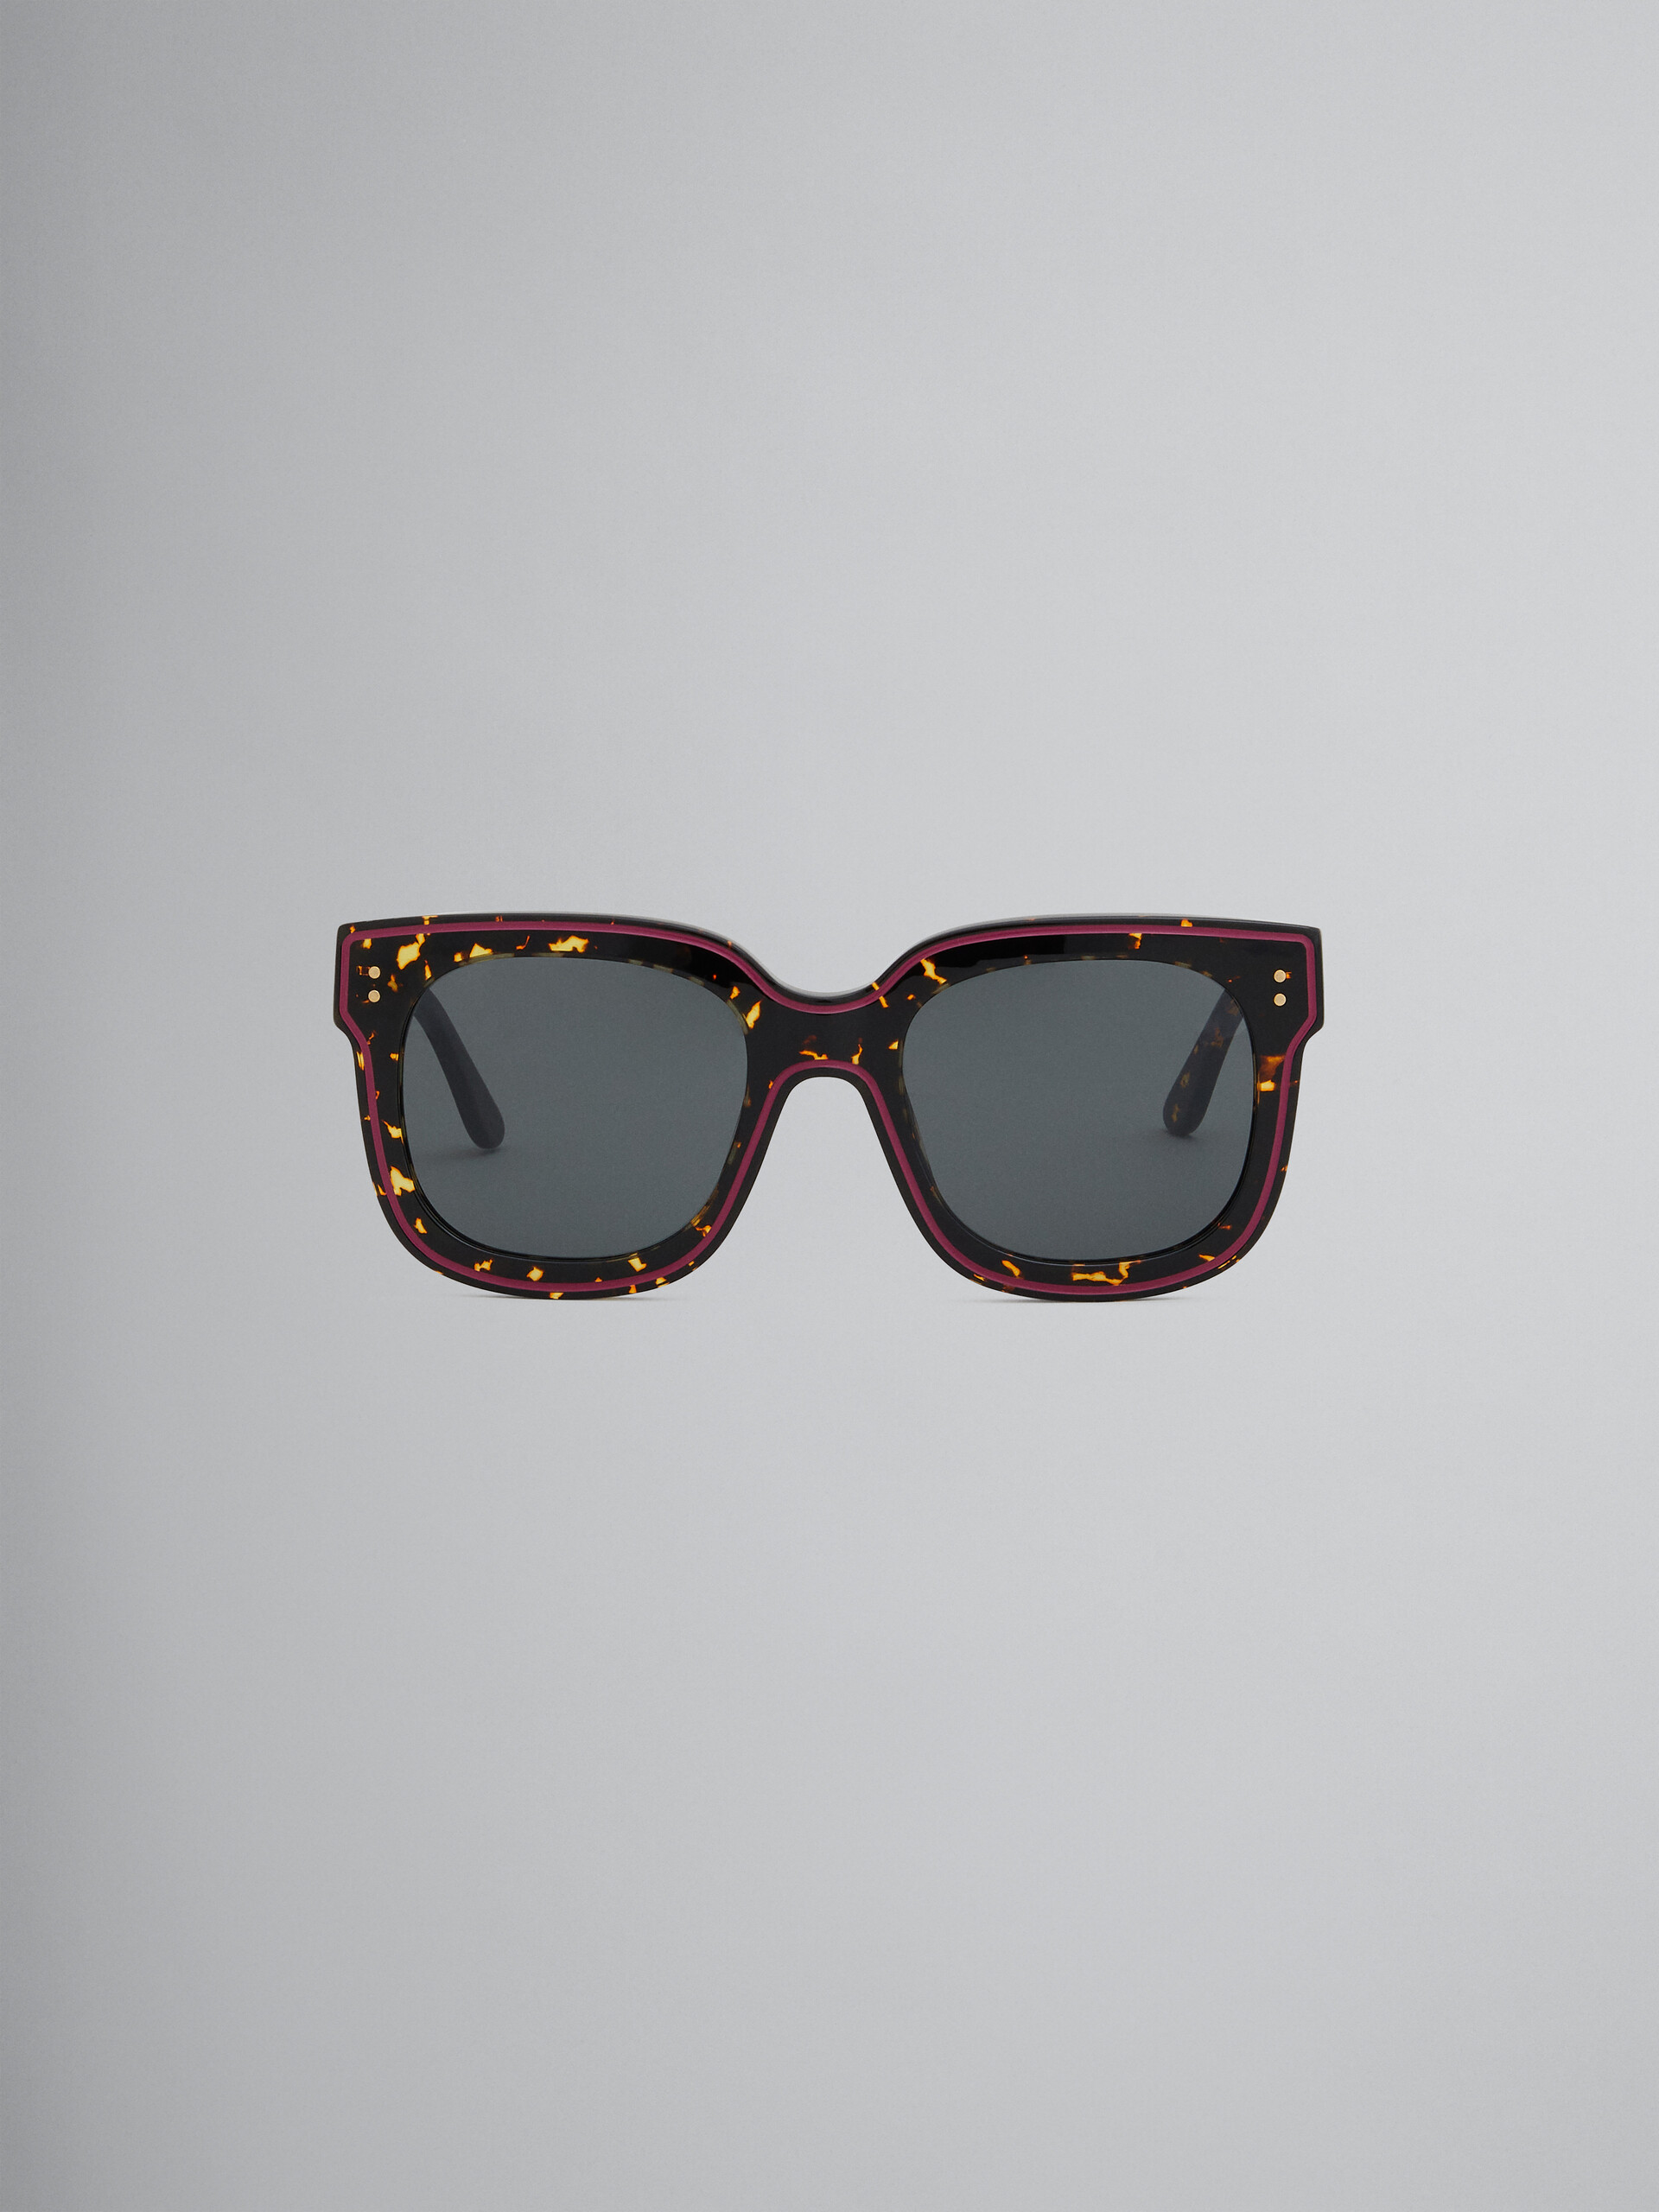 Black acetate LI RIVER sunglasses - Optical - Image 1